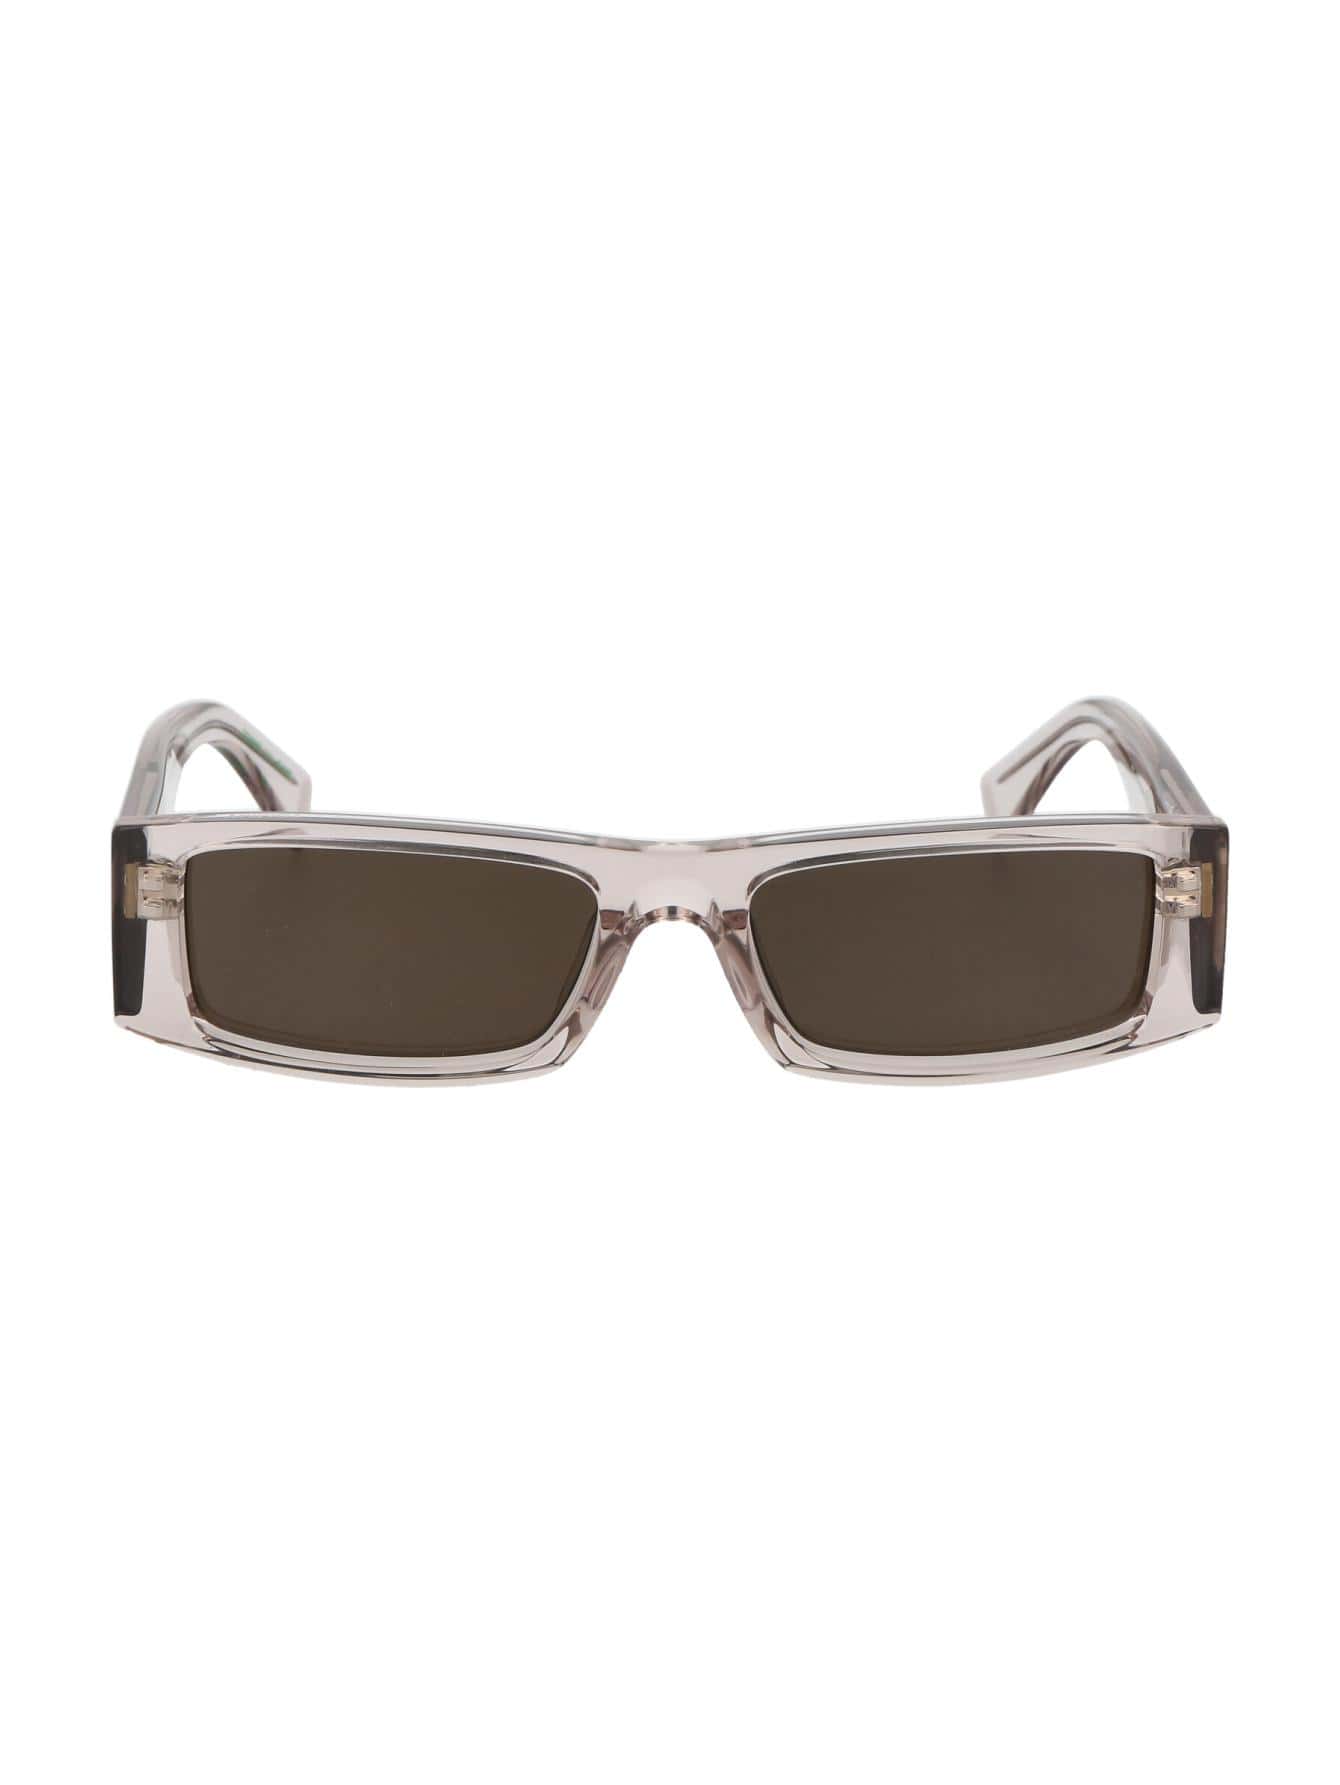 Мужские солнцезащитные очки Tommy Hilfiger DECOR TJ0092S10A70, многоцветный солнцезащитные очки tommy hilfiger серый